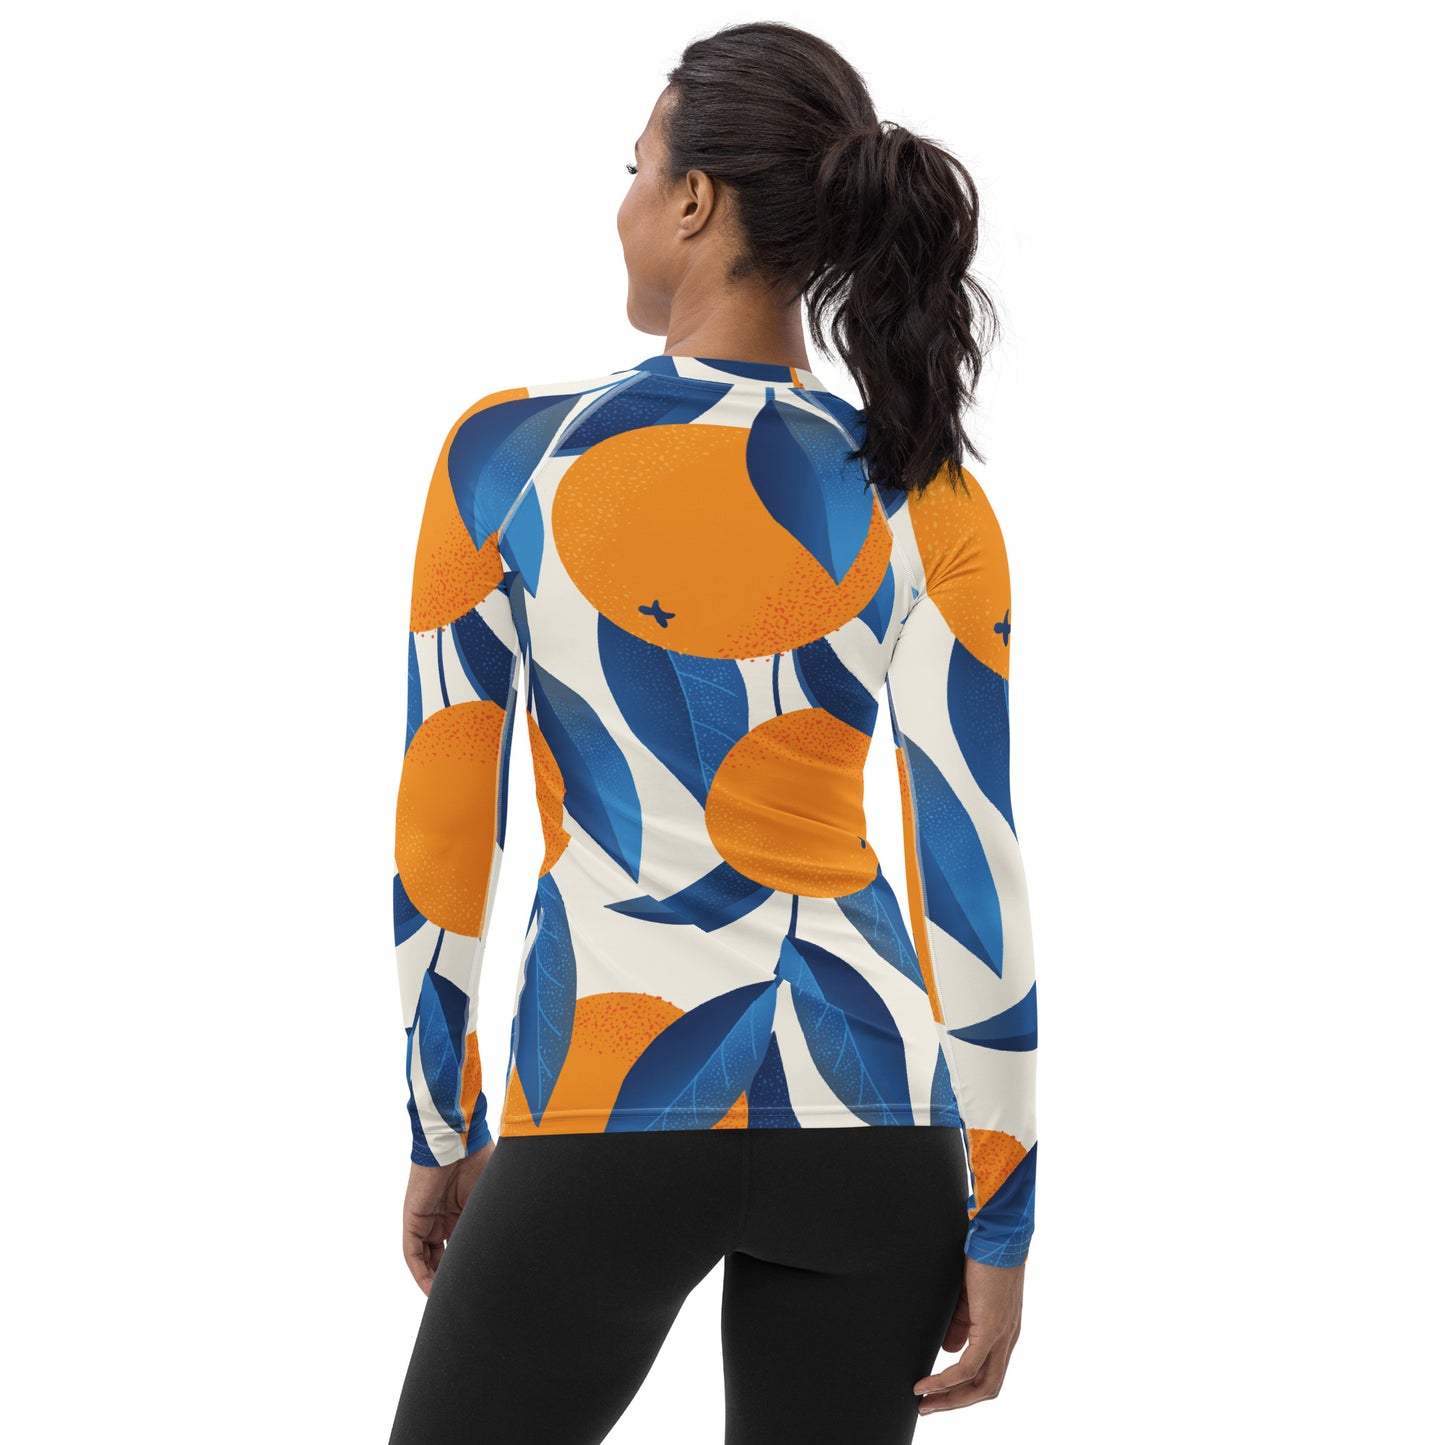 "Orange" patterned women's long-sleeved shirt